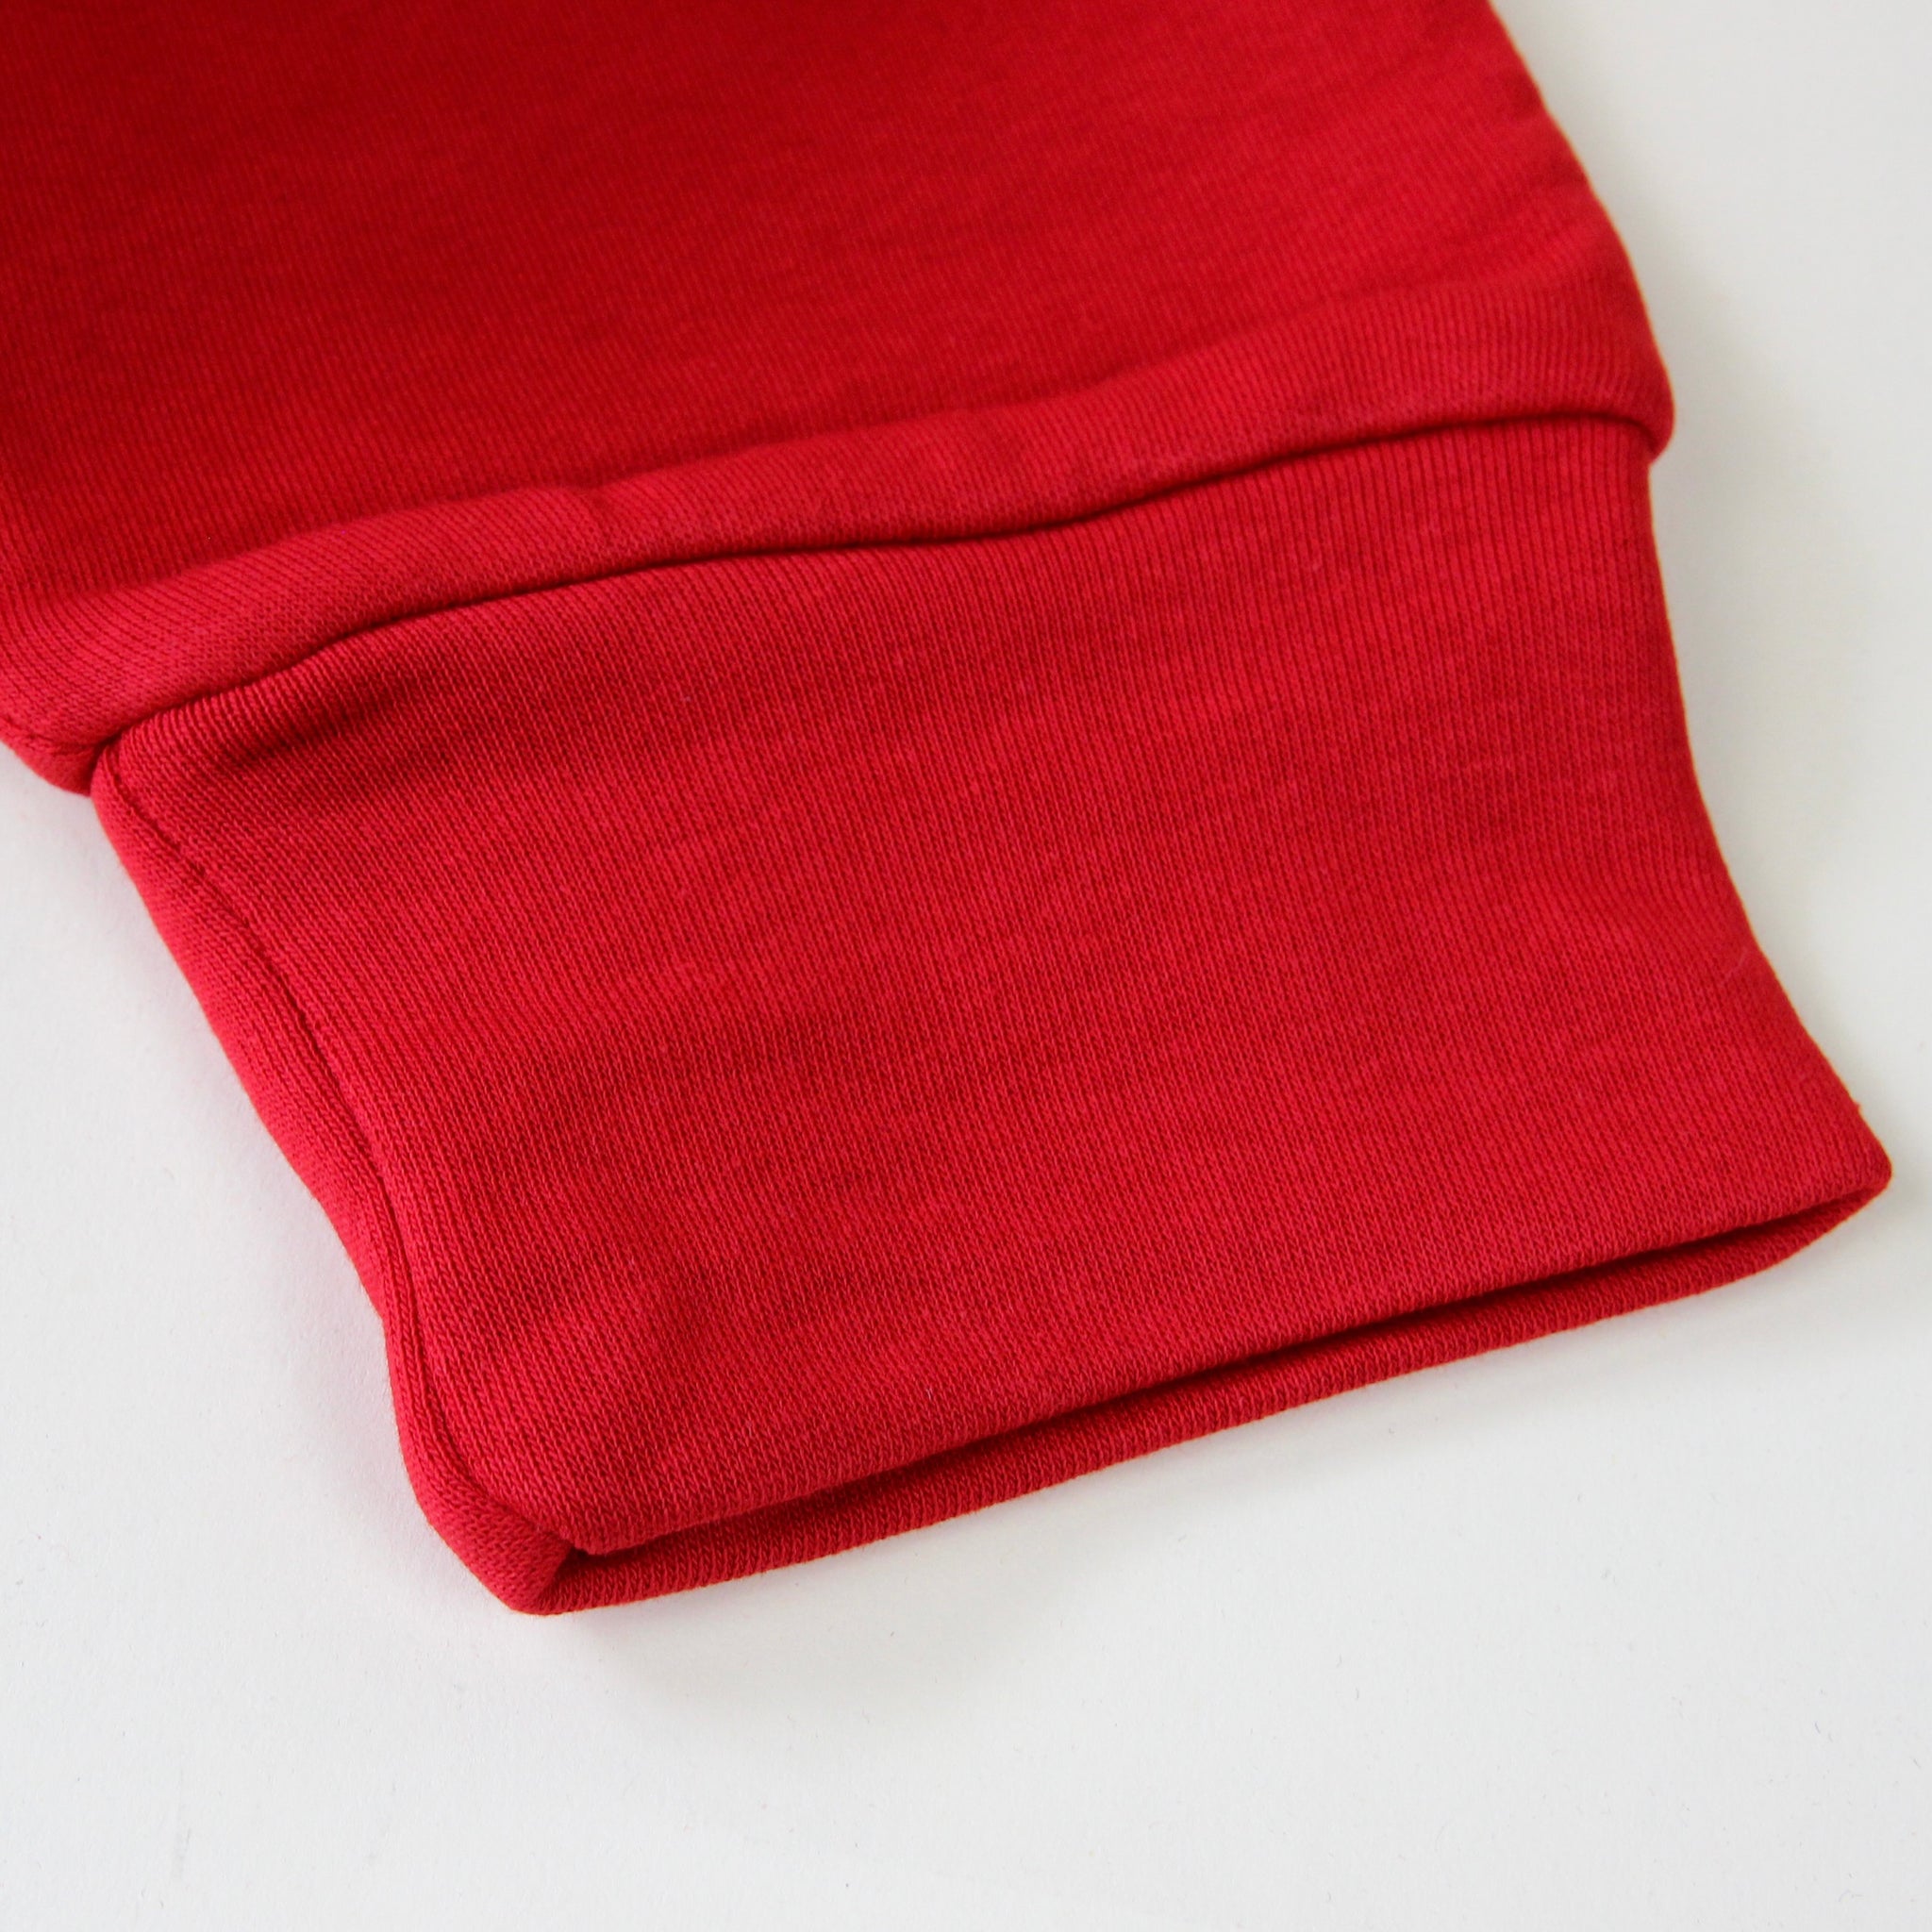 Bungee Oblečení Hoodie (Red)